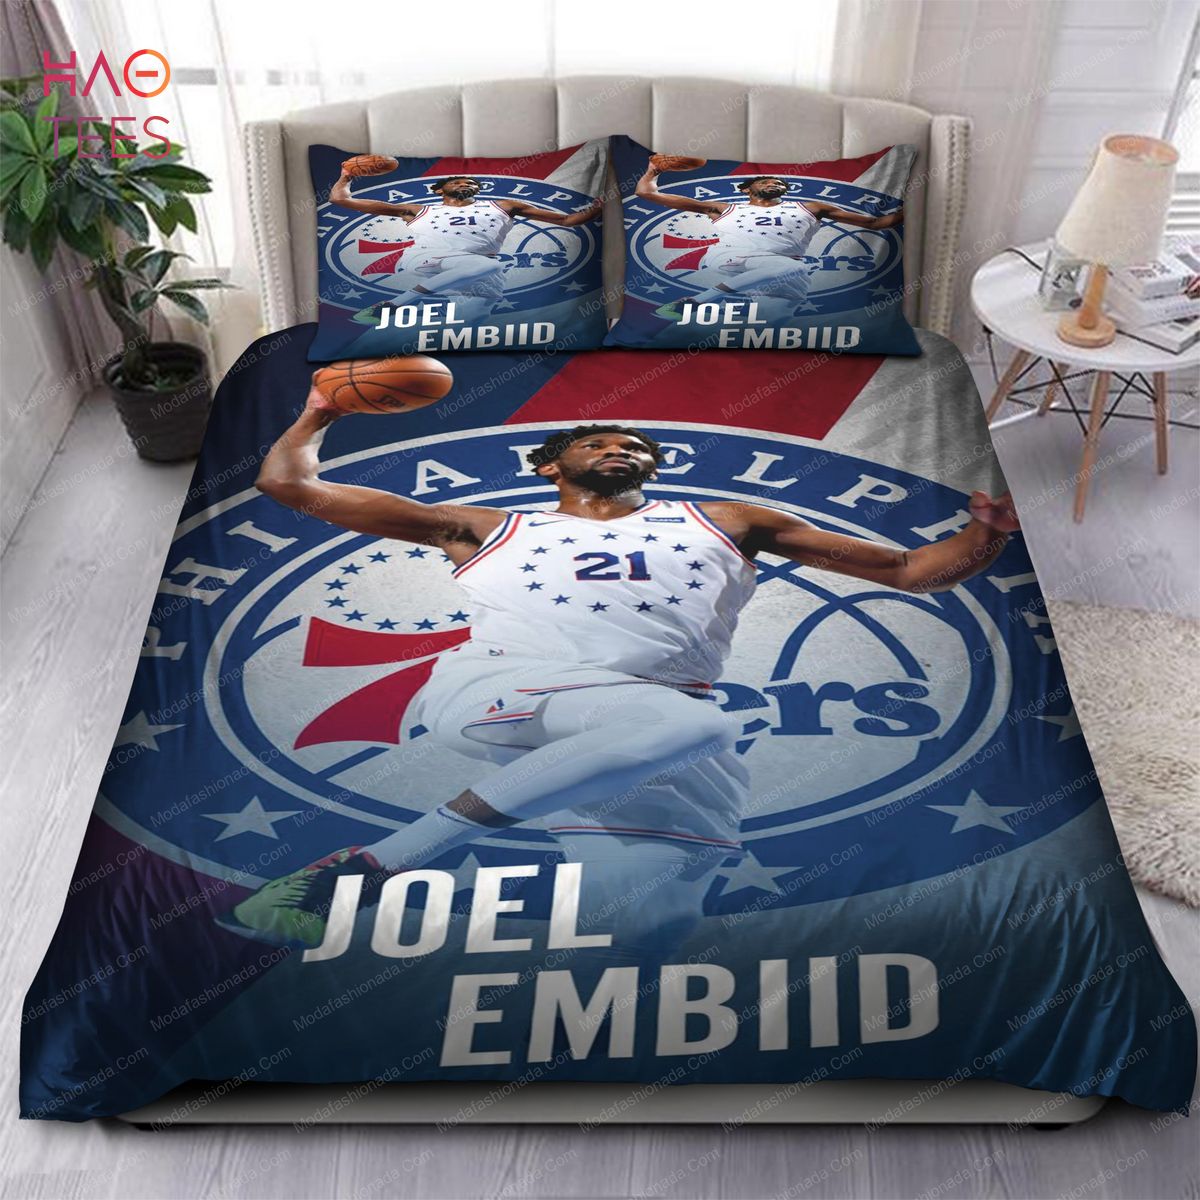 Joel Embiid Philadelphia 76ers NBA Bedding Sets